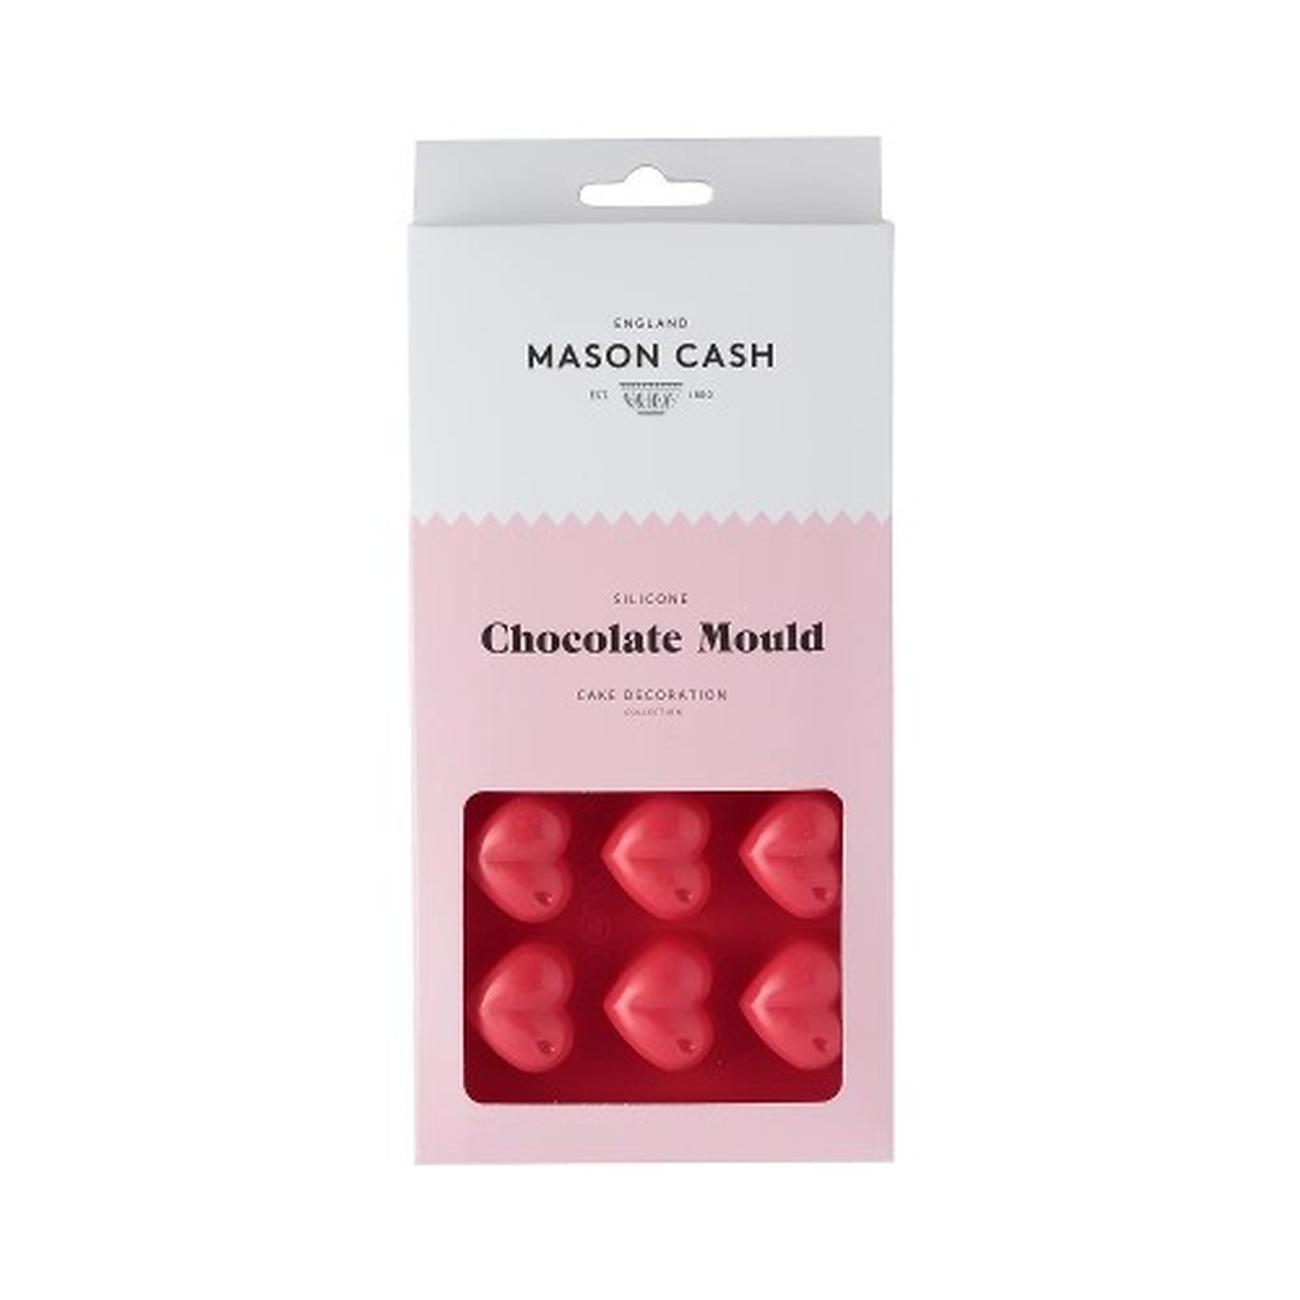 mason-cash-heart-silicone-chocolate-mould - Mason Cash Heart Silicone Chocolate Mould